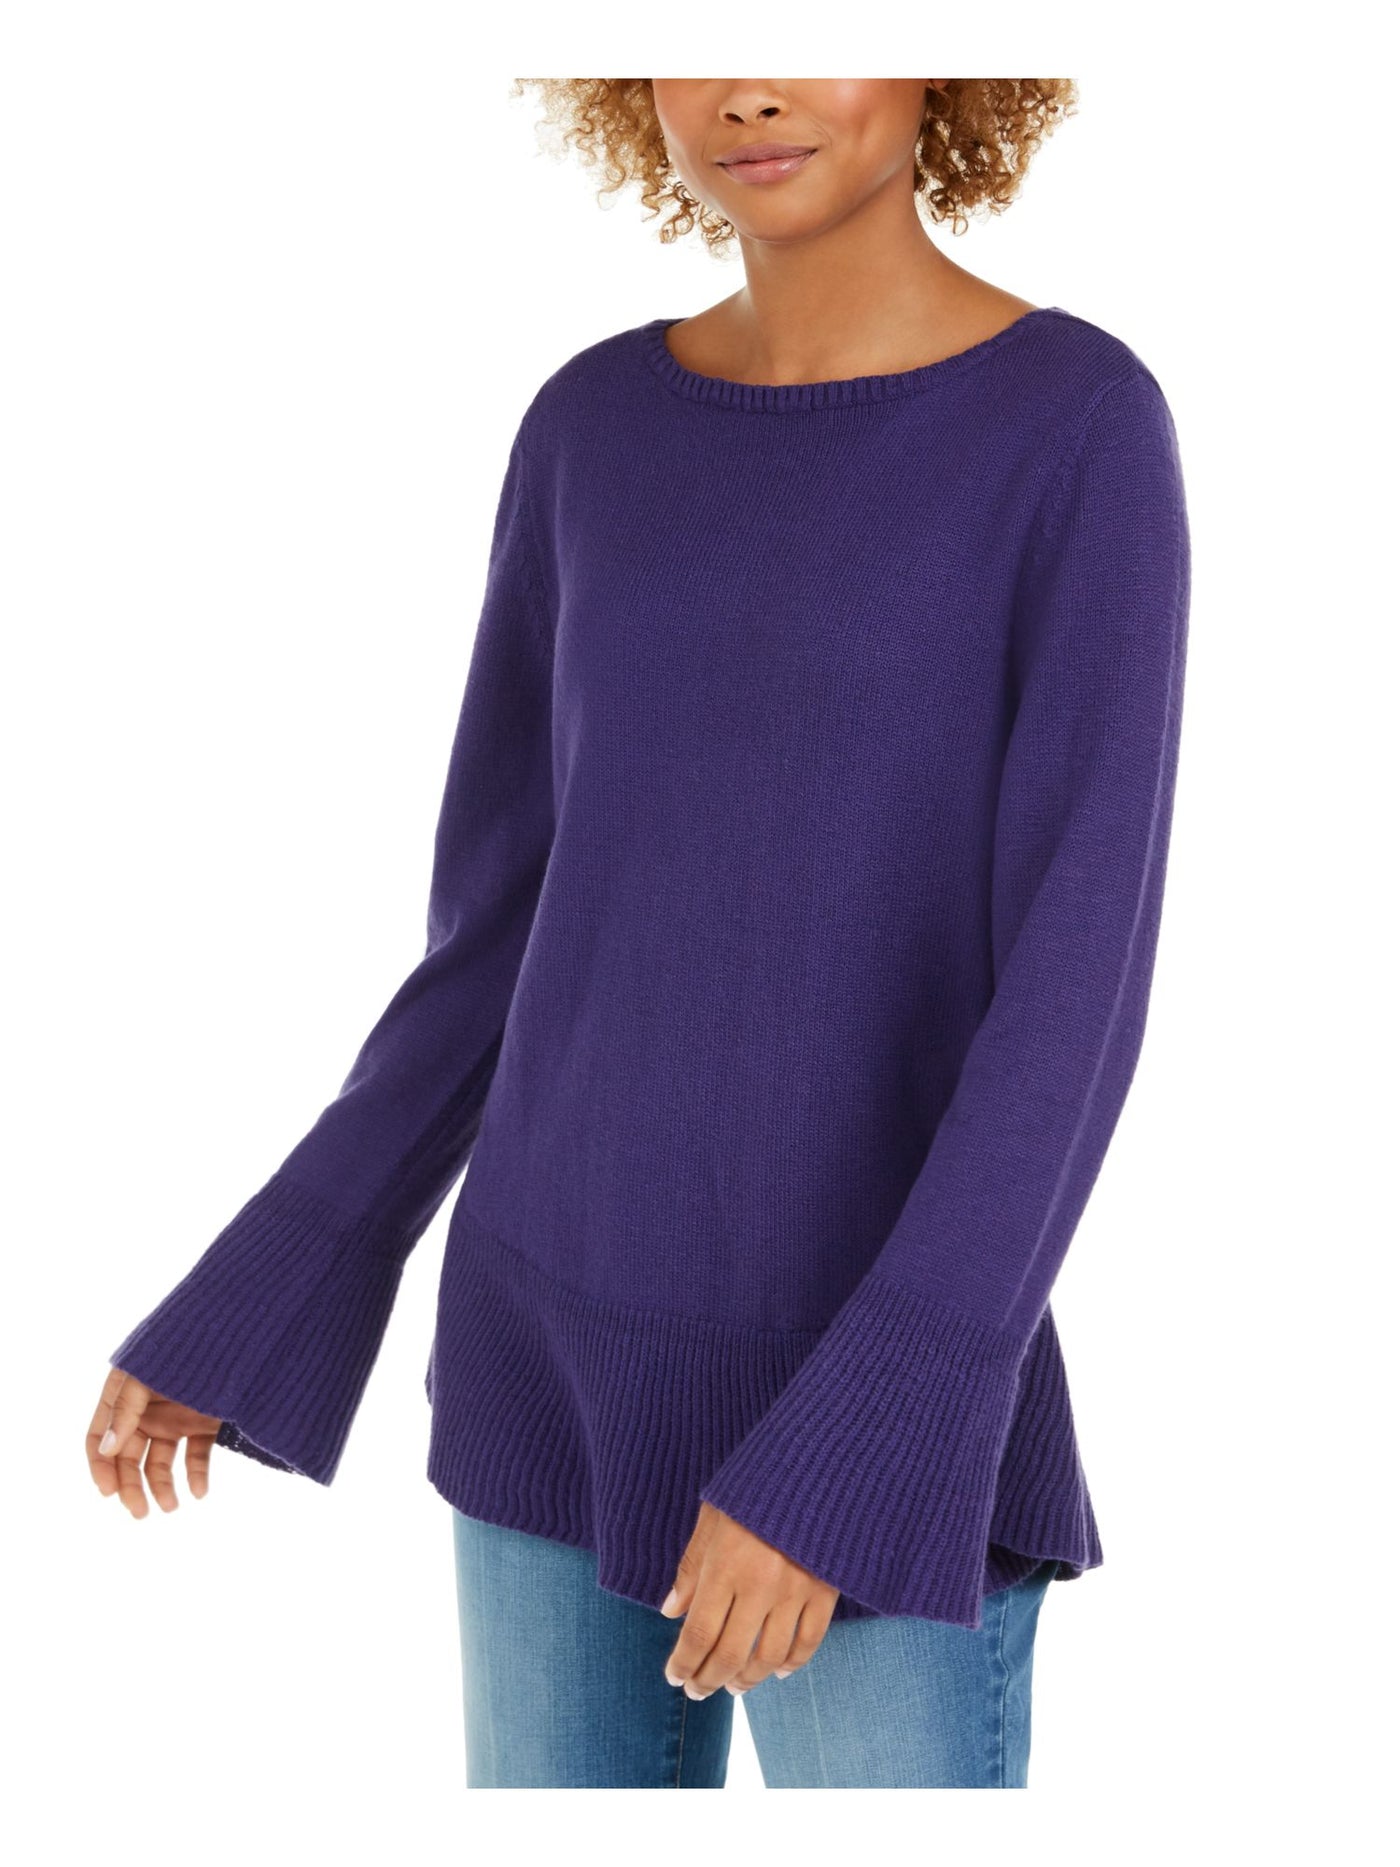 STYLE & COMPANY Womens Purple Bell Sleeve Jewel Neck Sweater Petites Size: PM